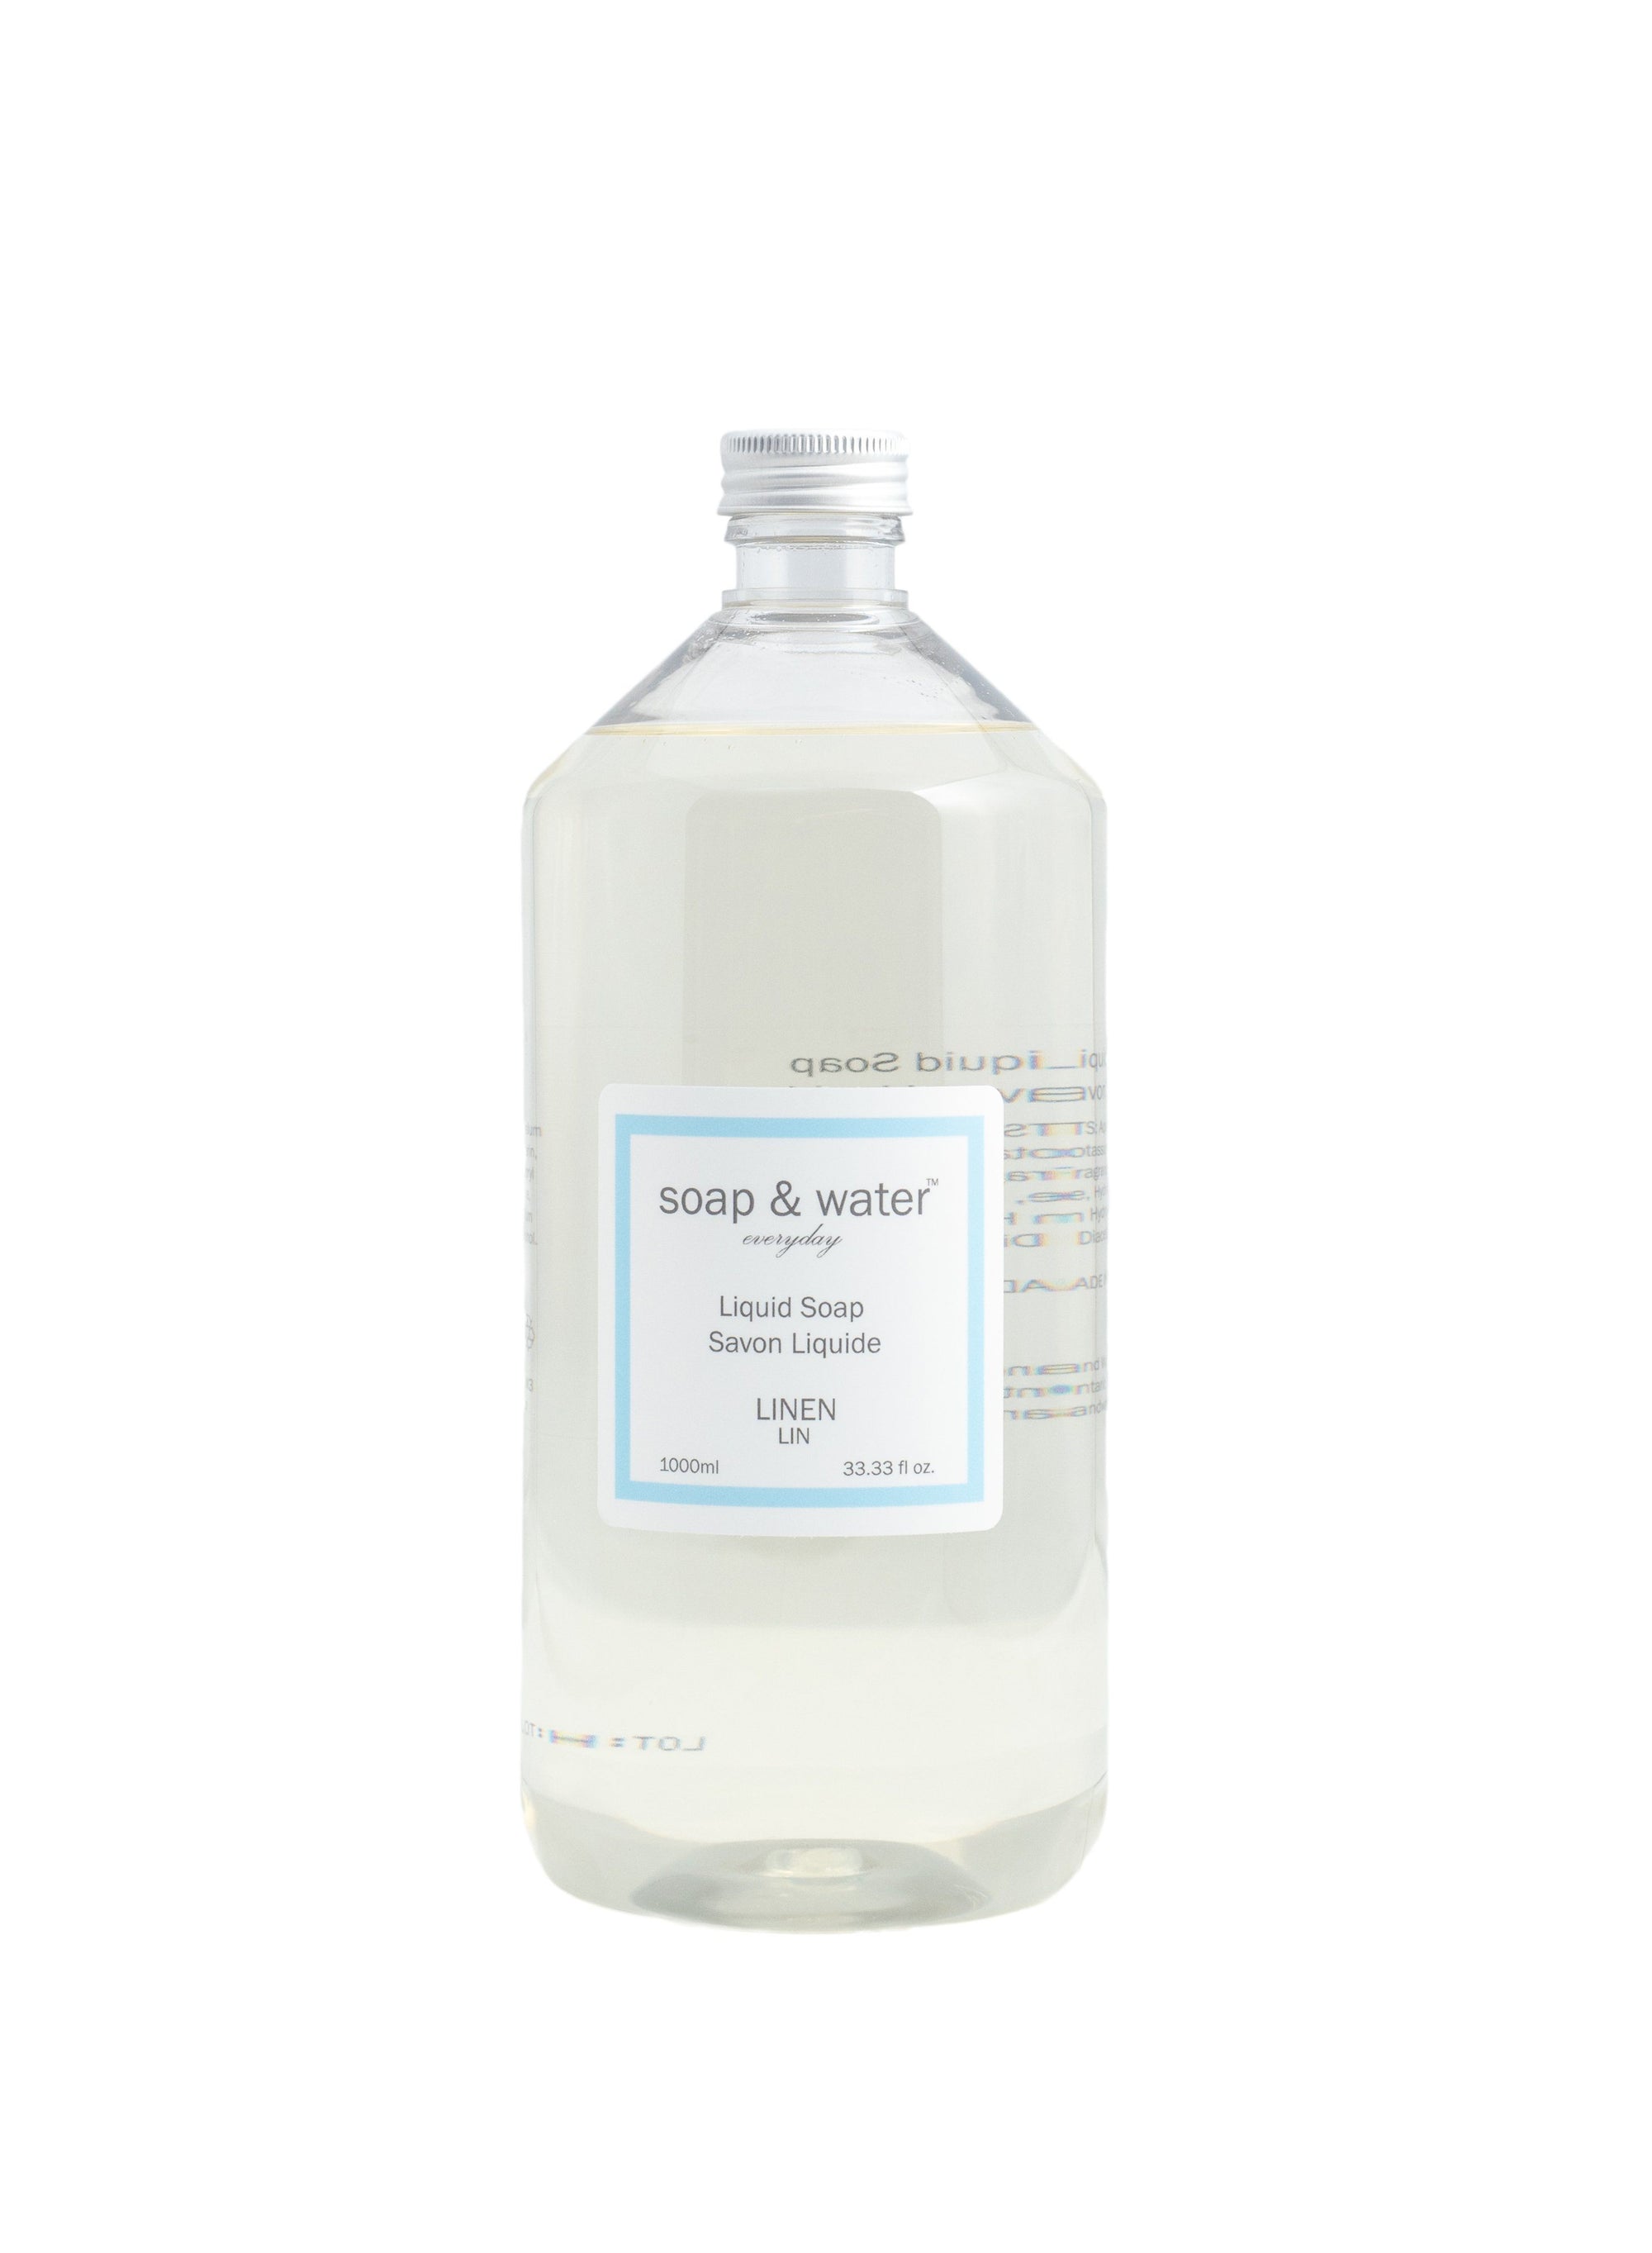 Soap & Water Liquid Soap - 1L Refill - Linen - Soap & Water Everyday